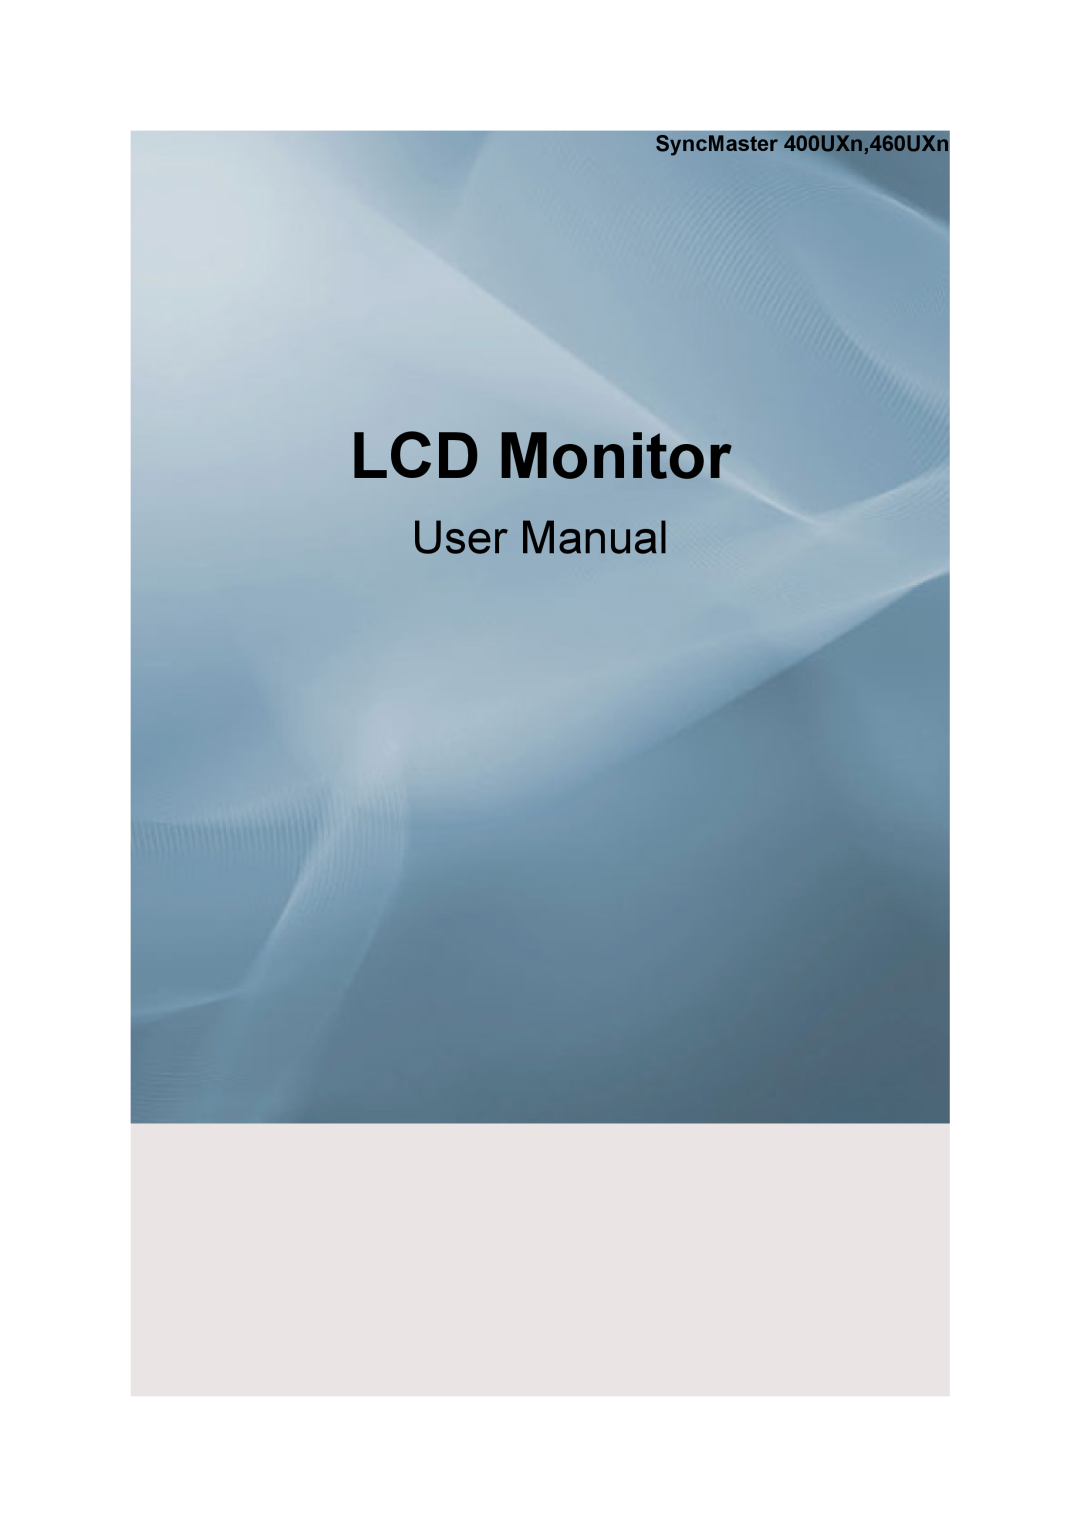 Samsung user manual SyncMaster 400UXn,460UXn, LCD Monitor 